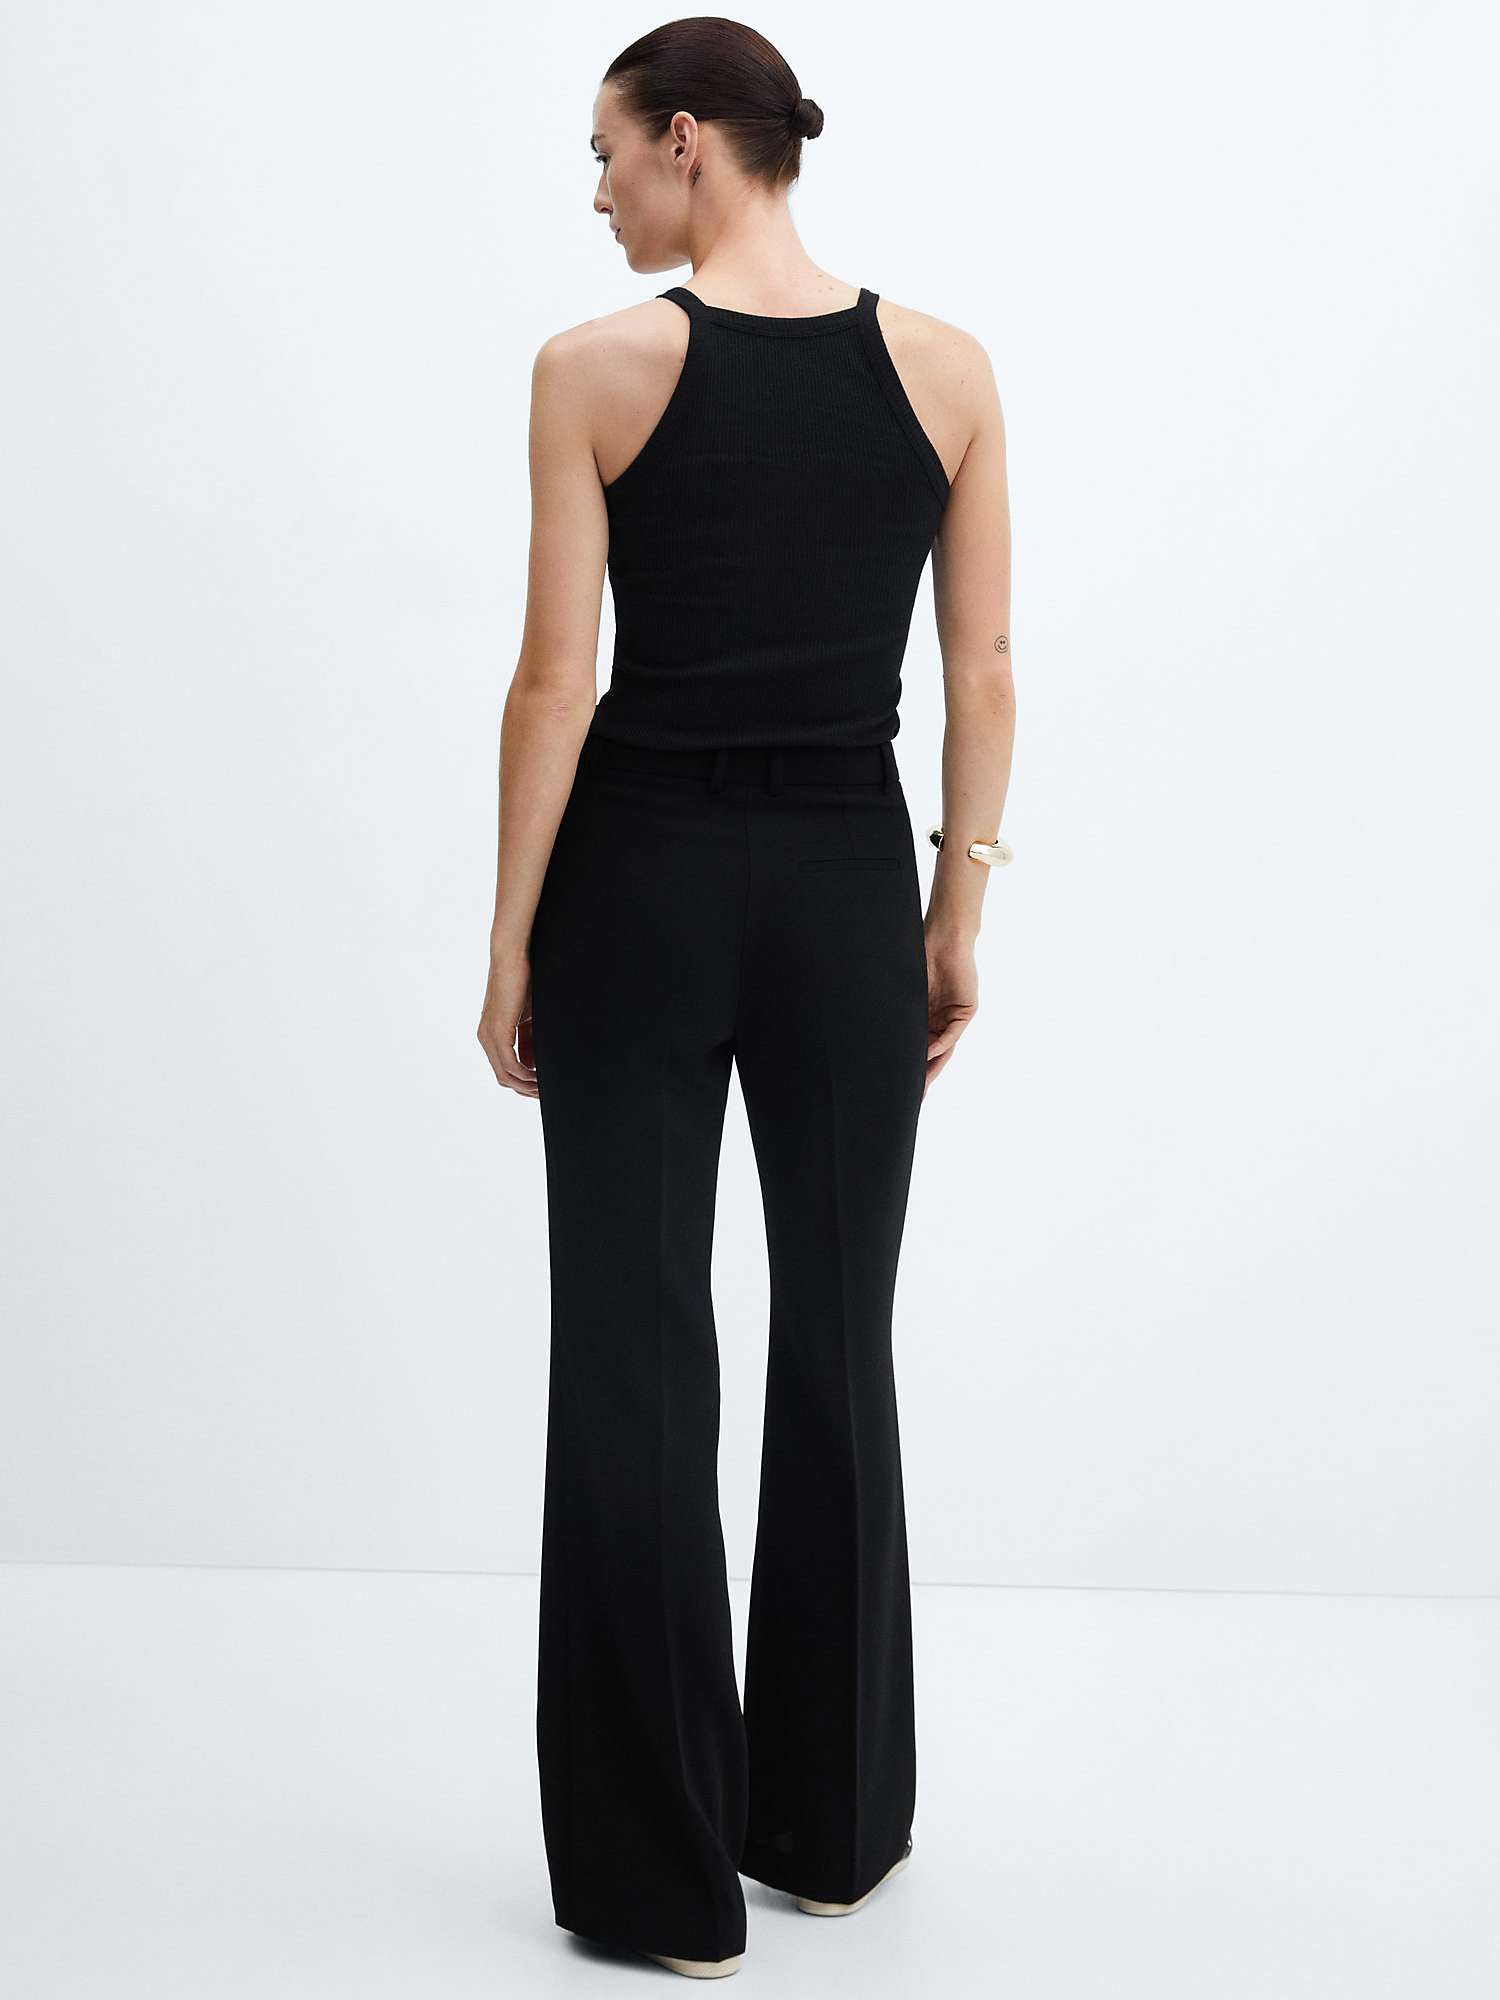 Buy Mango Tortuga Flared Suit Trousers, Black Online at johnlewis.com